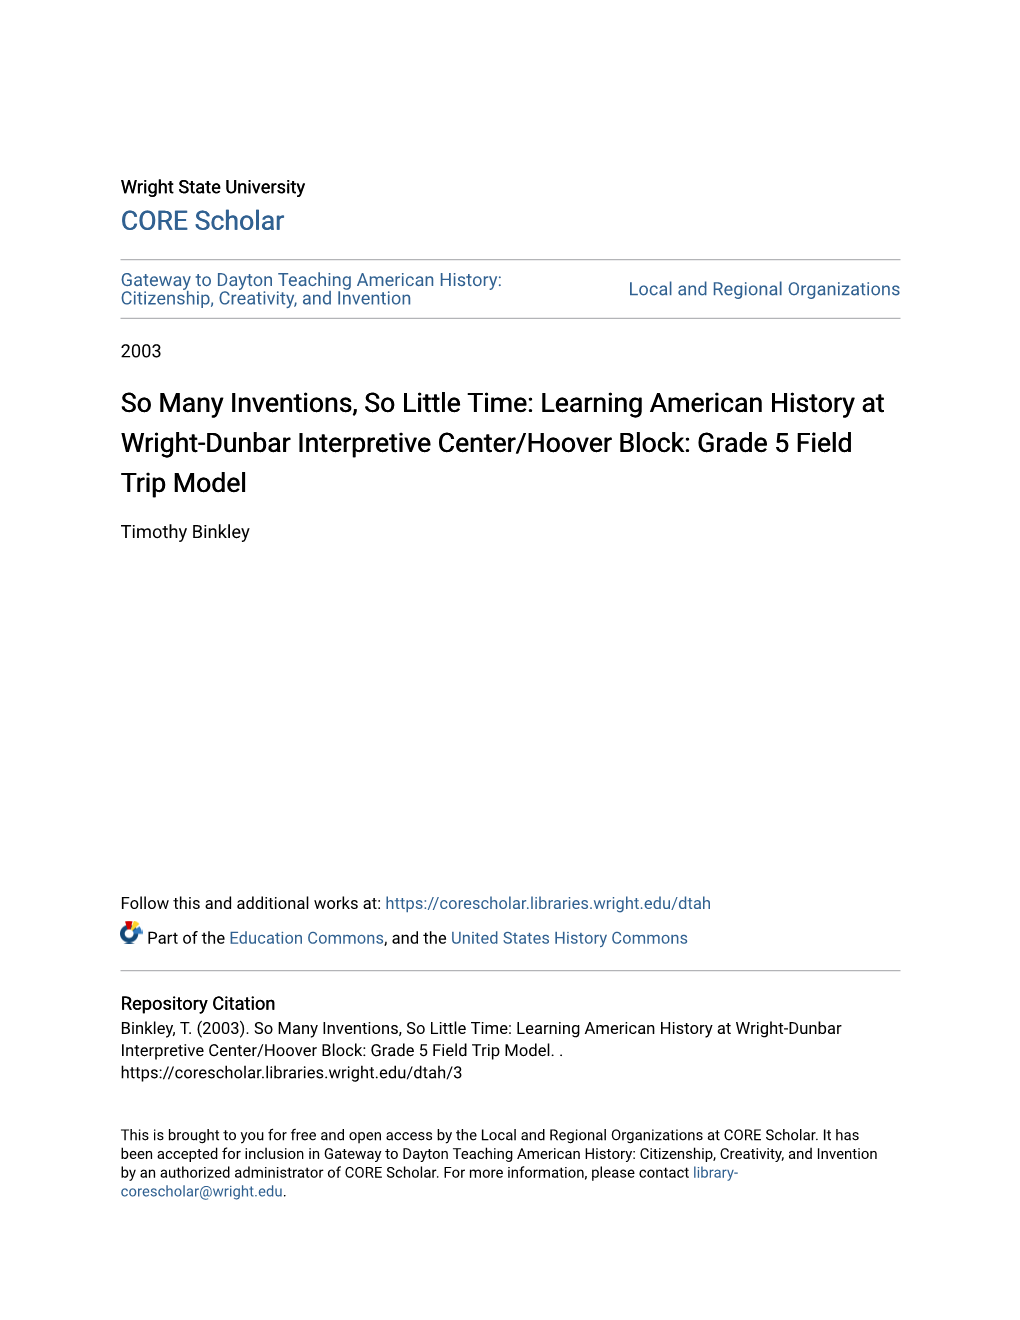 Learning American History at Wright-Dunbar Interpretive Center/Hoover Block: Grade 5 Field Trip Model